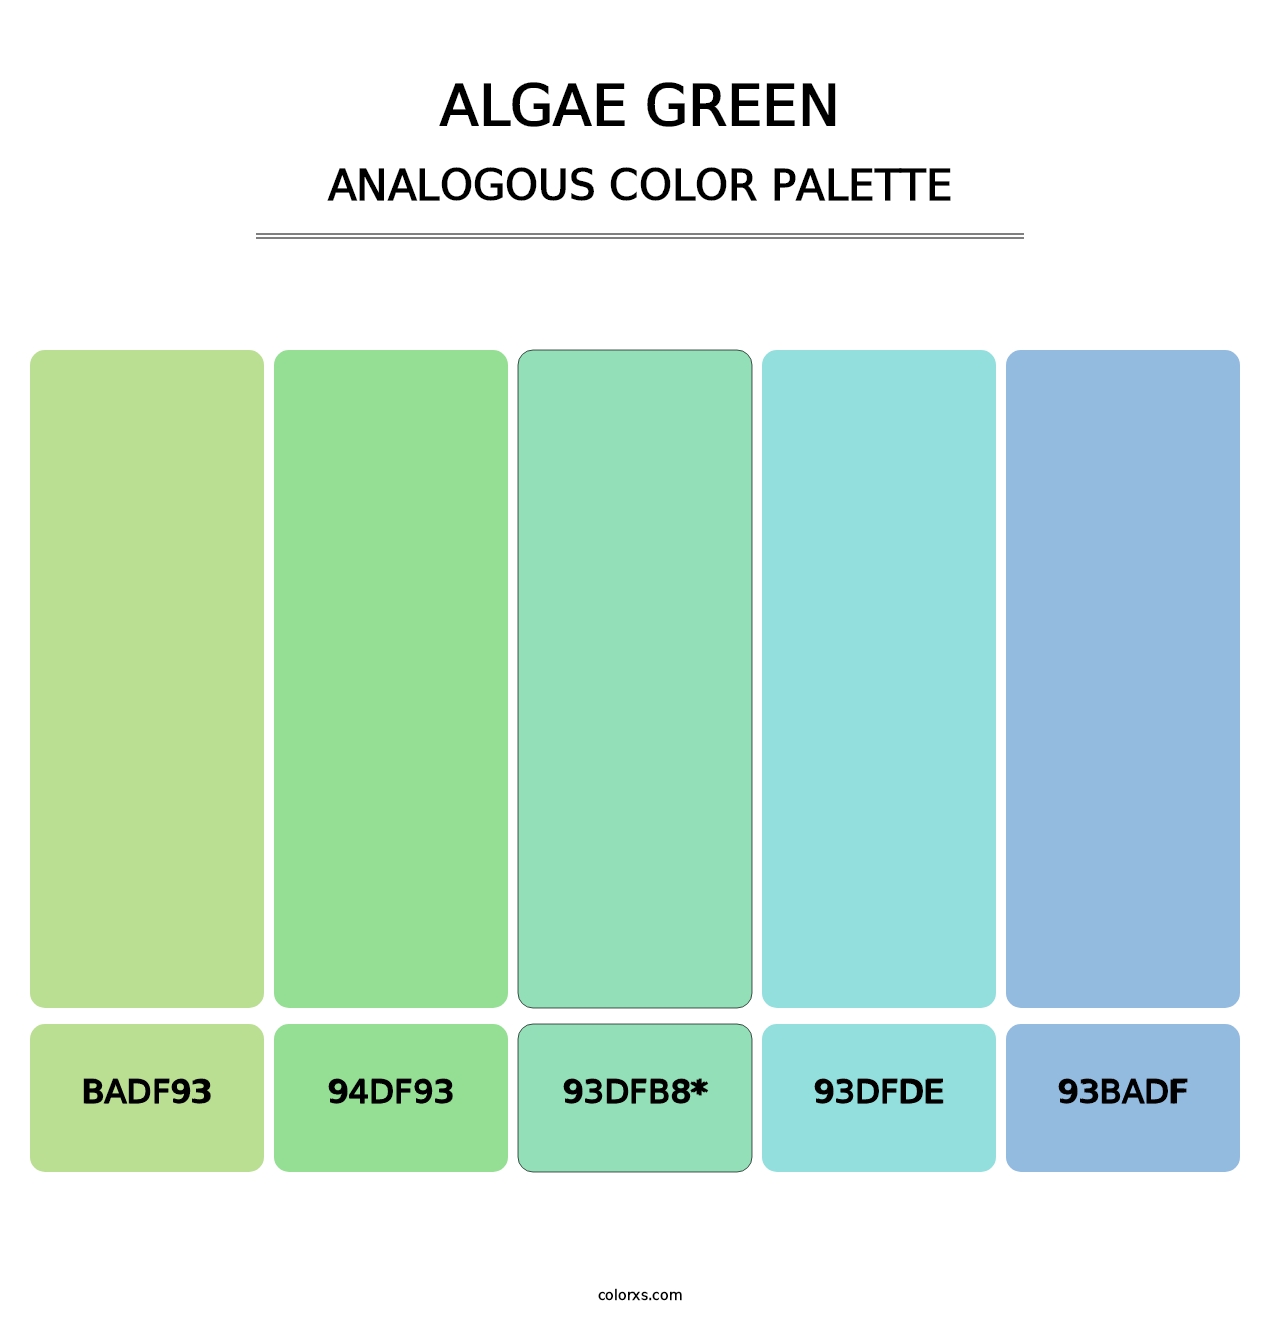 Algae Green - Analogous Color Palette